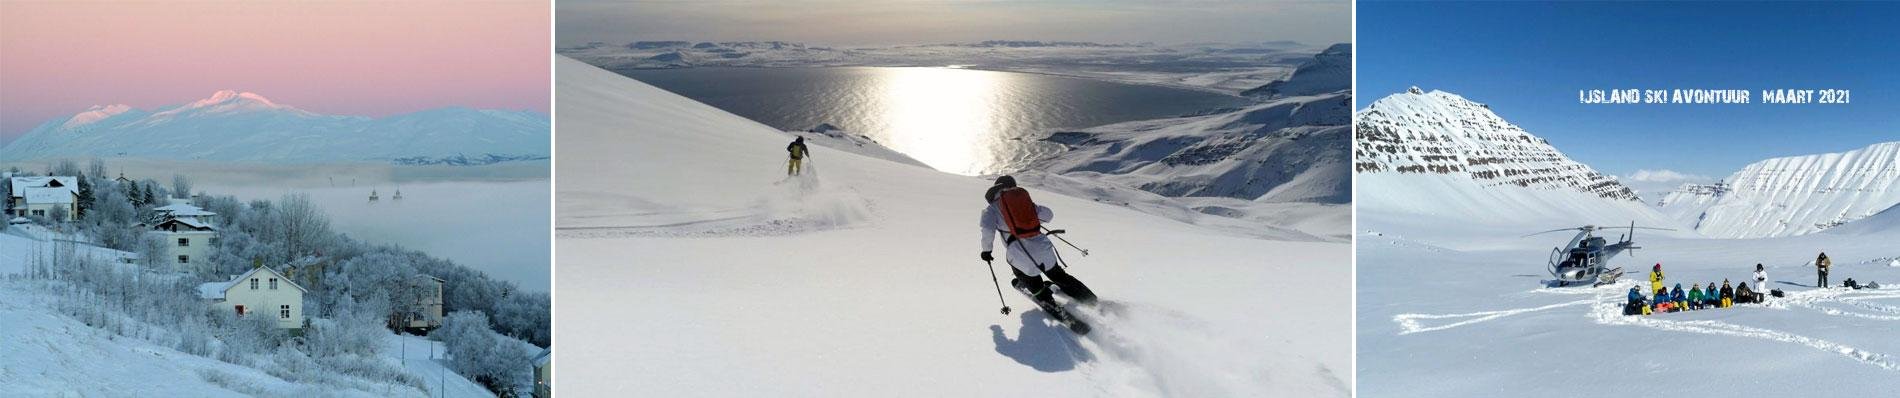 IJsland ski avonturen wintersport